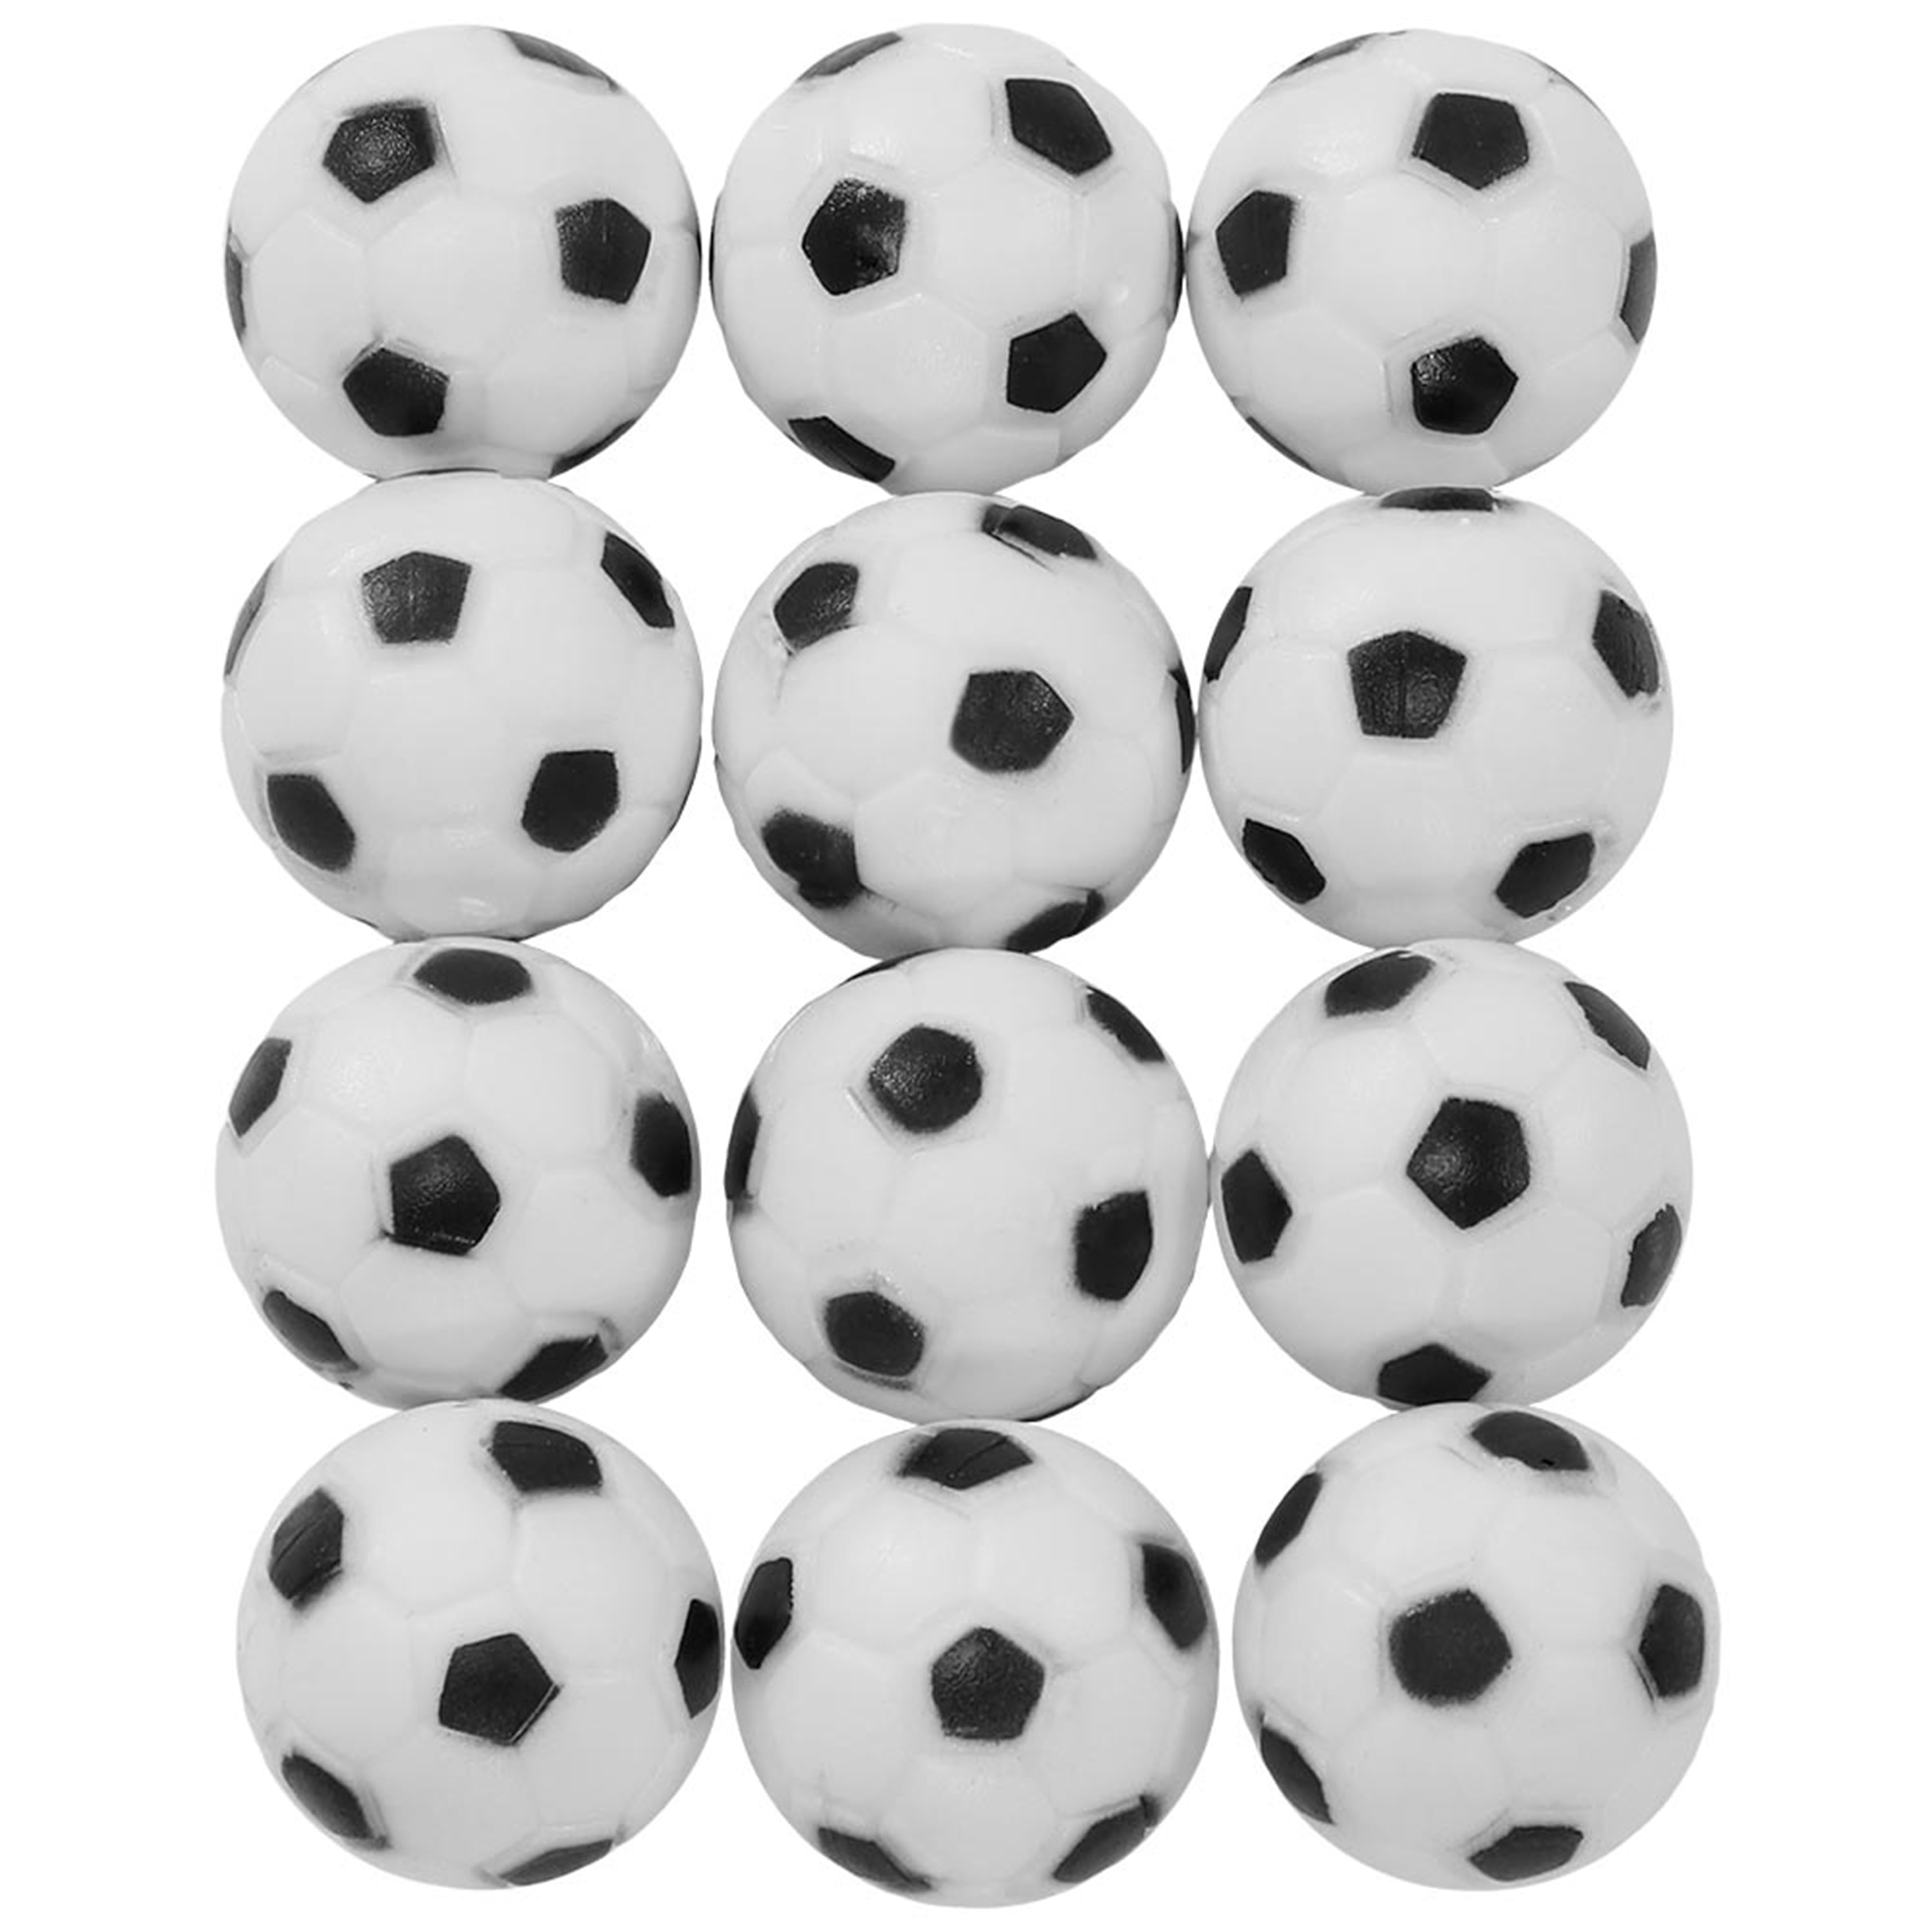 Indoor Soccer Table Foosball Replacement Part ABS Balls Football Fussball Mini 